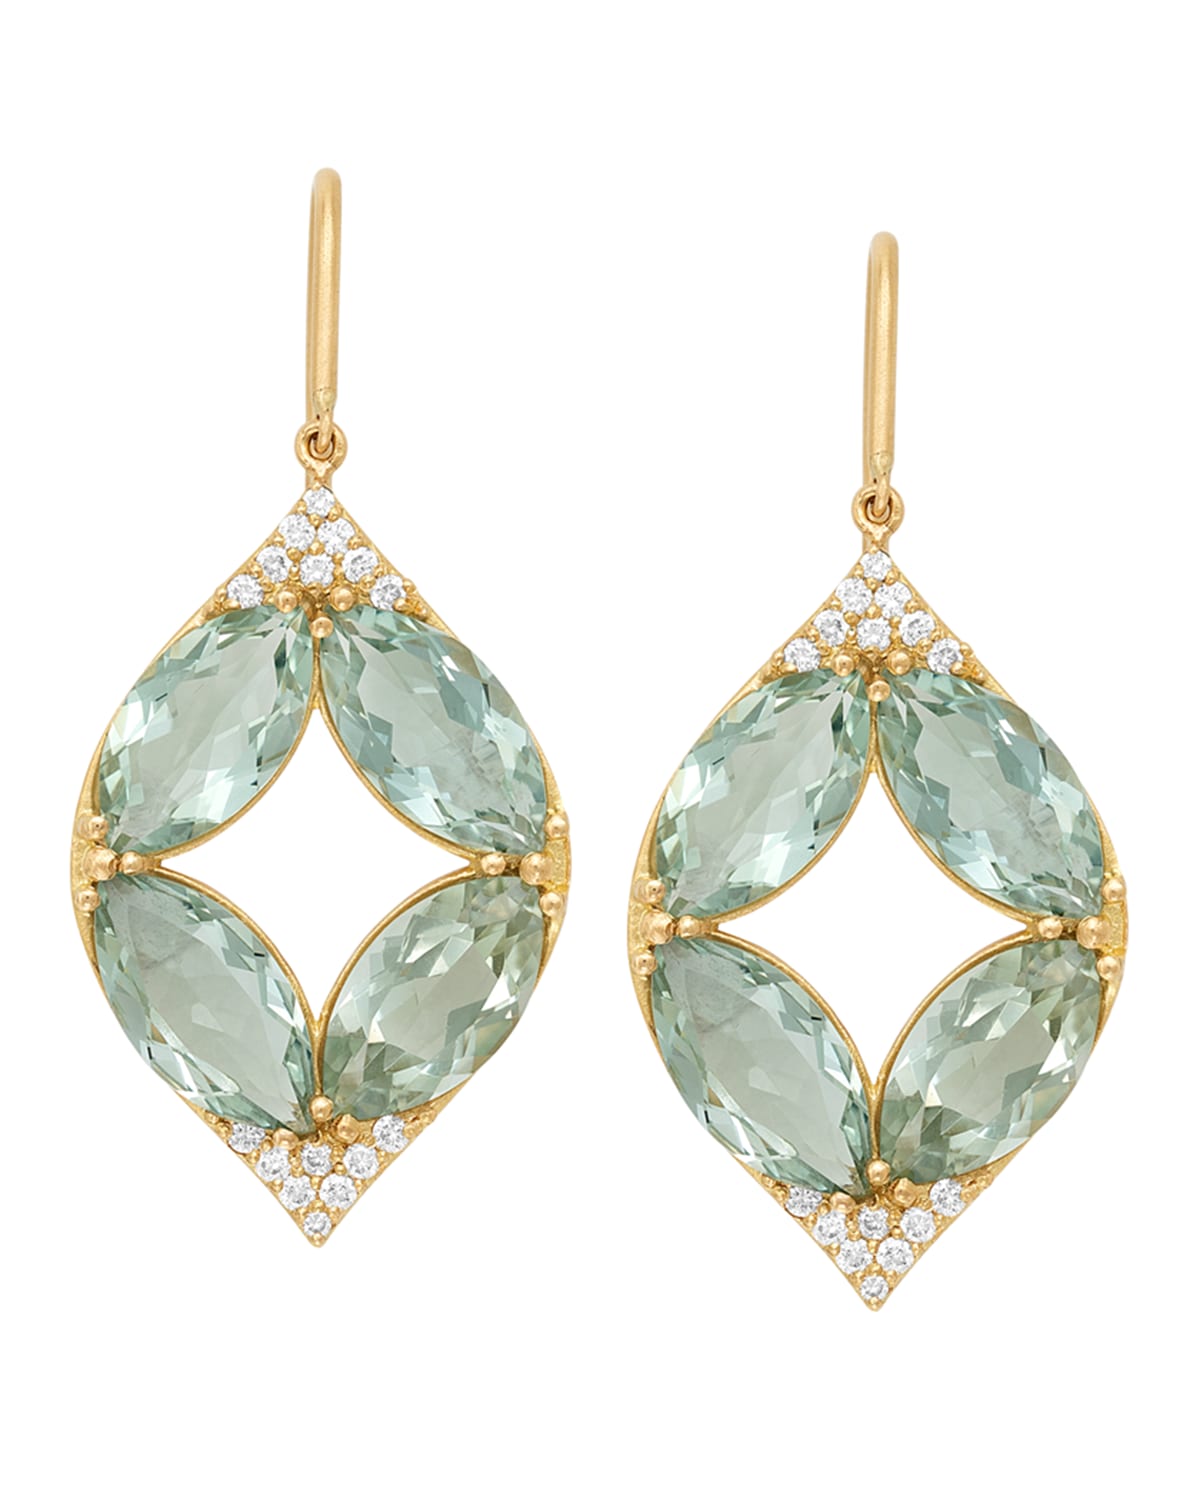 Multicolor Sapphire and Diamond Necklace – Jamie Wolf